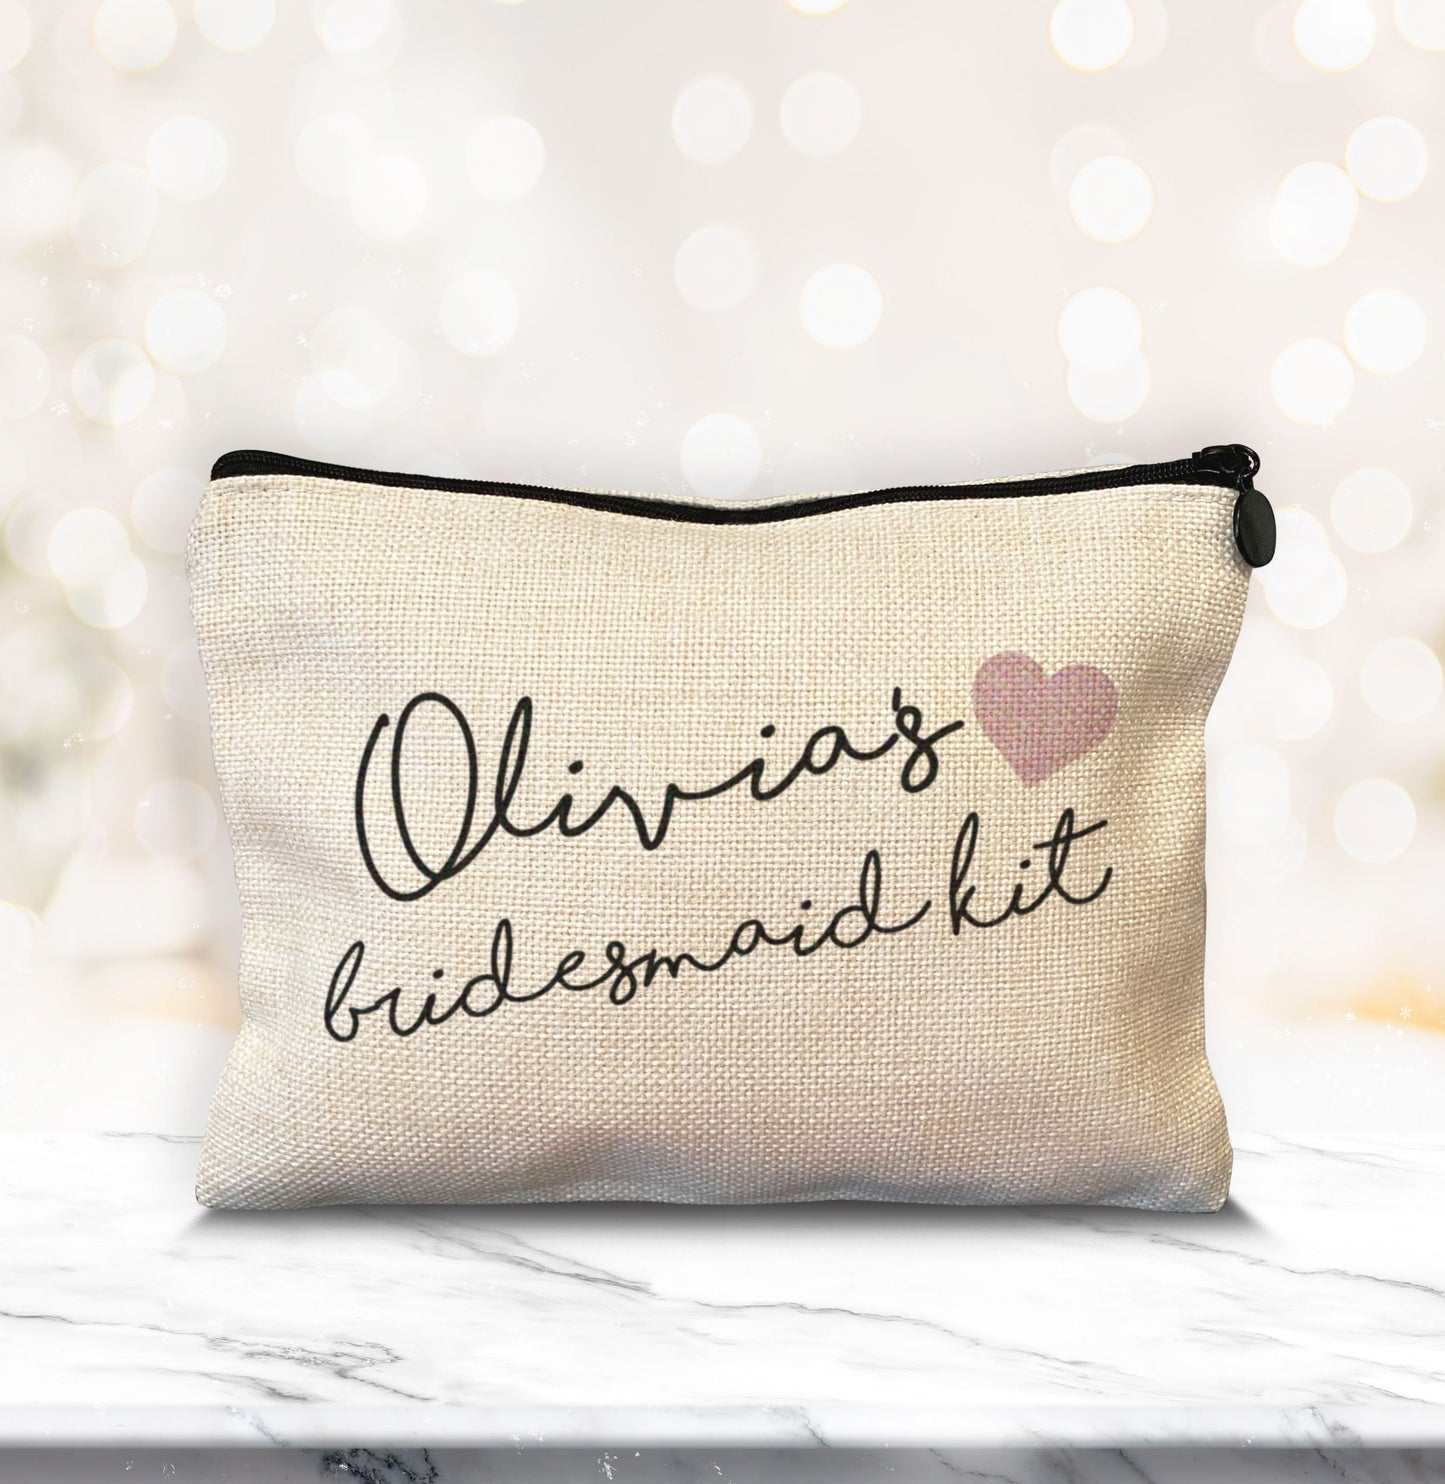 Personalised Make Up Bag. Personalised Beard Kit Bag. Bridesmaid Gift. Christmas Gift for girls. Personalised cosmetic bag. All Personalised